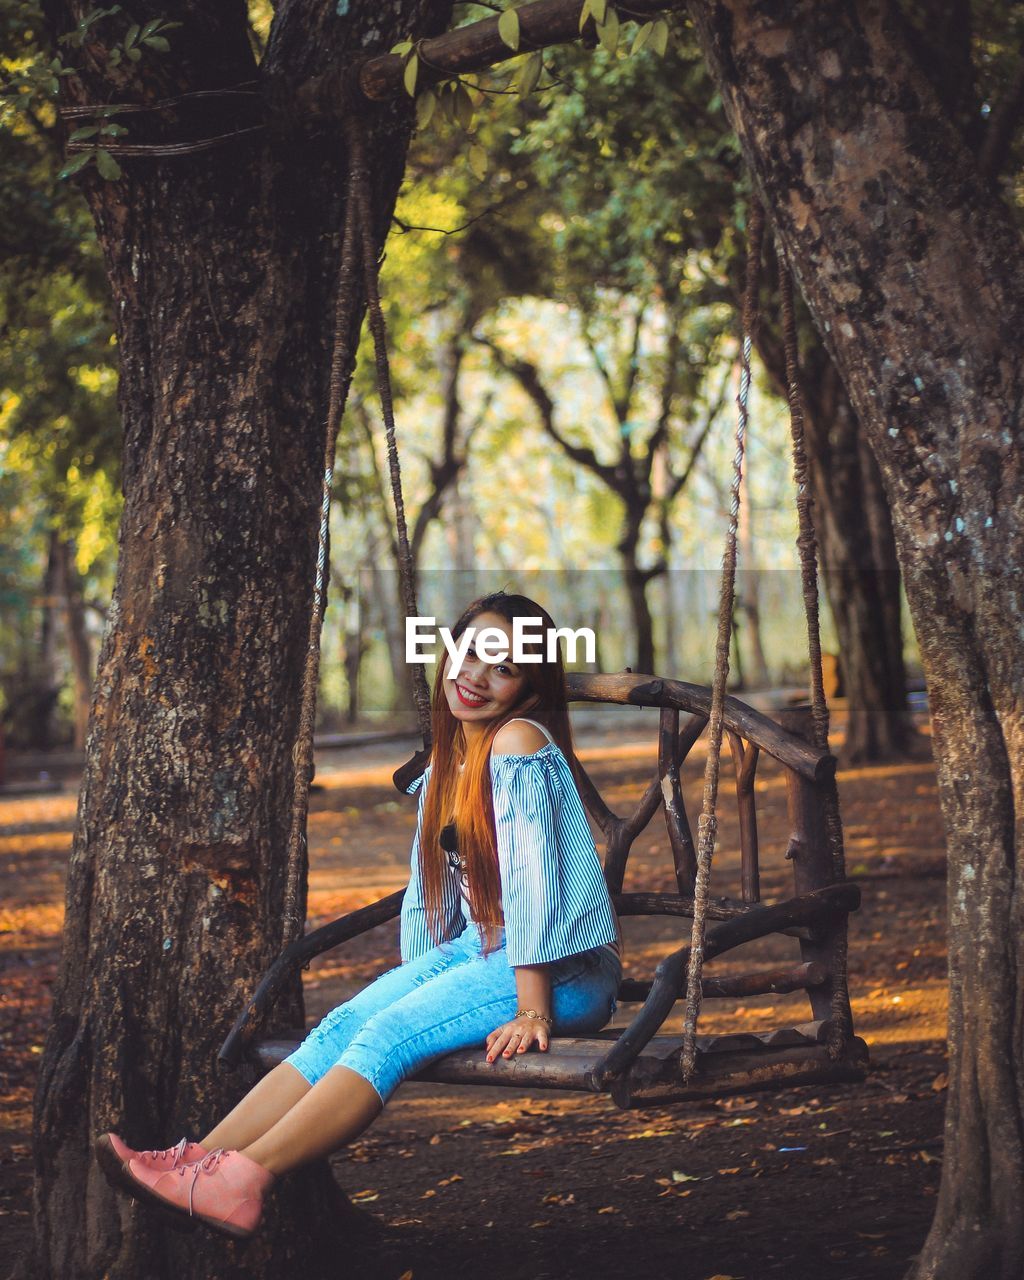 Full length portrait of woman sitting on swing in park